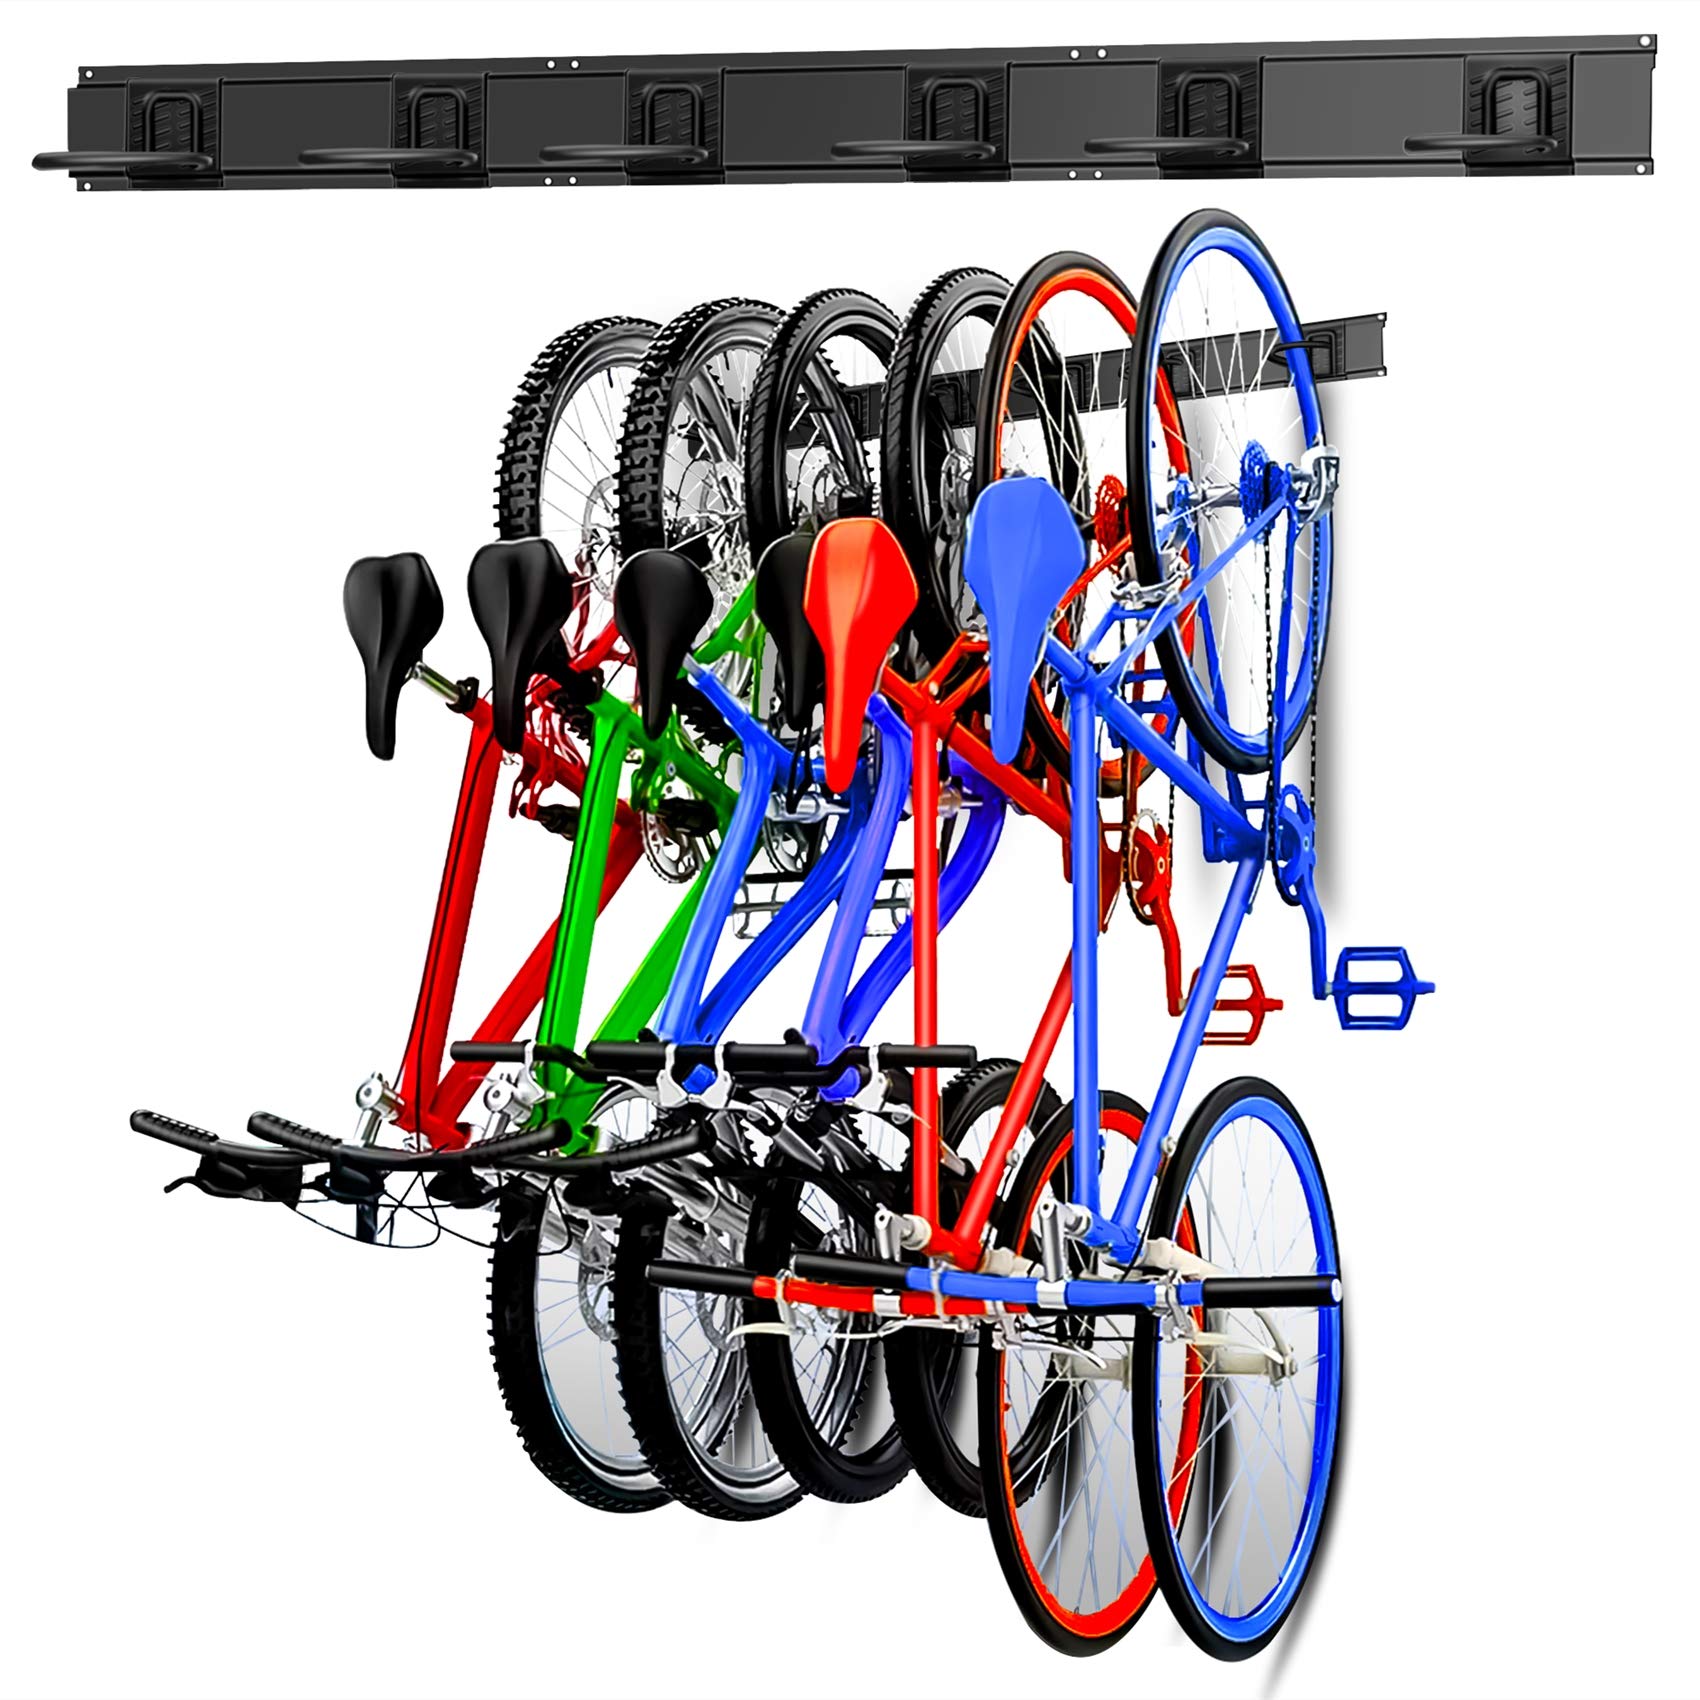 Walmann Bike Storage Rack, 6 Bike Hooks for Garage & Home